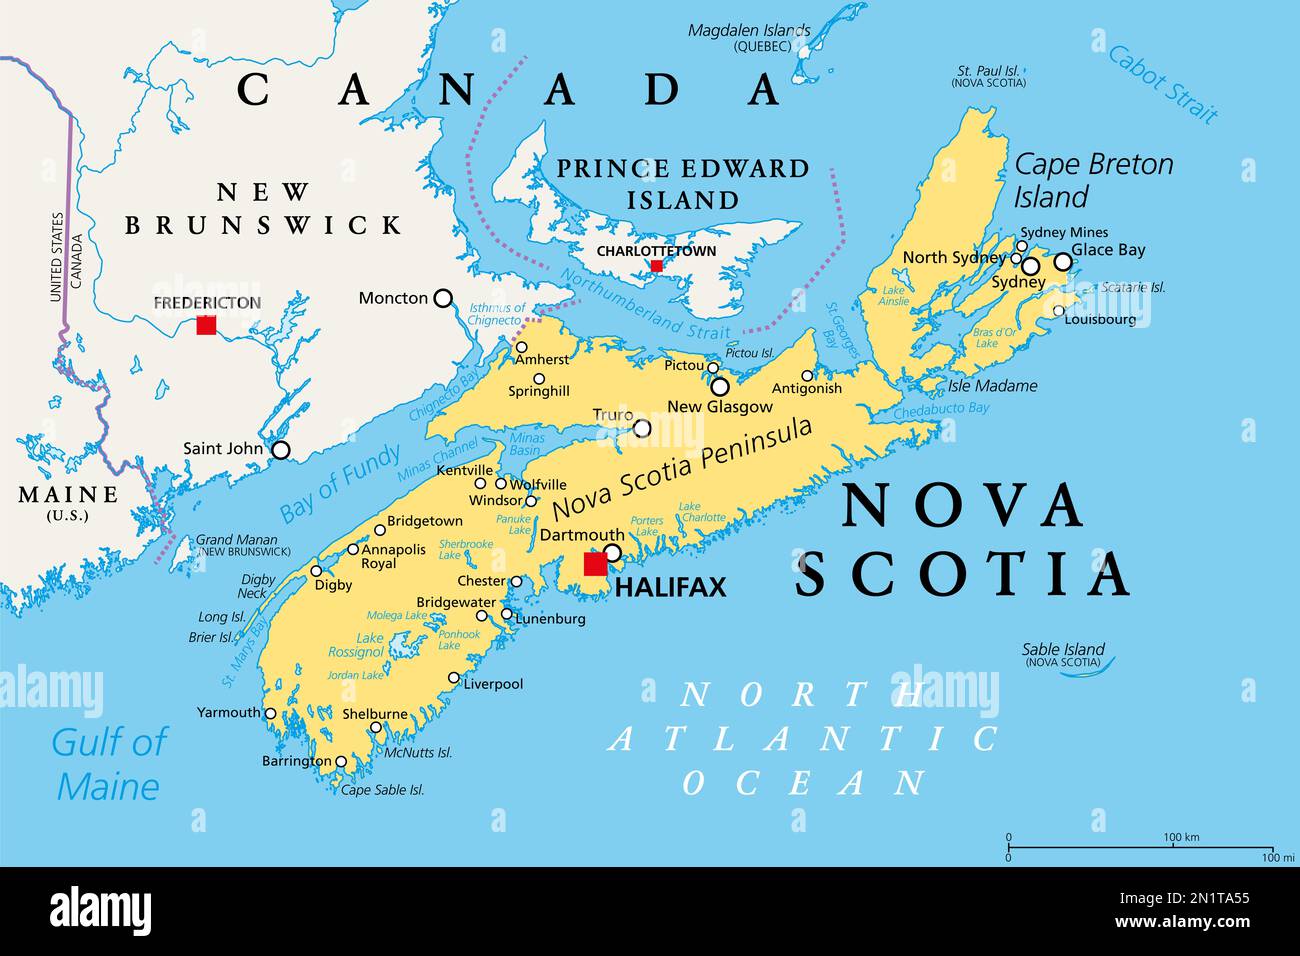 Nova Scotia, Maritime und Atlantic Province of Canada, politische Karte. Cape Breton Island und Nova Scotia Halbinsel, mit Hauptstadt Halifax. Stockfoto